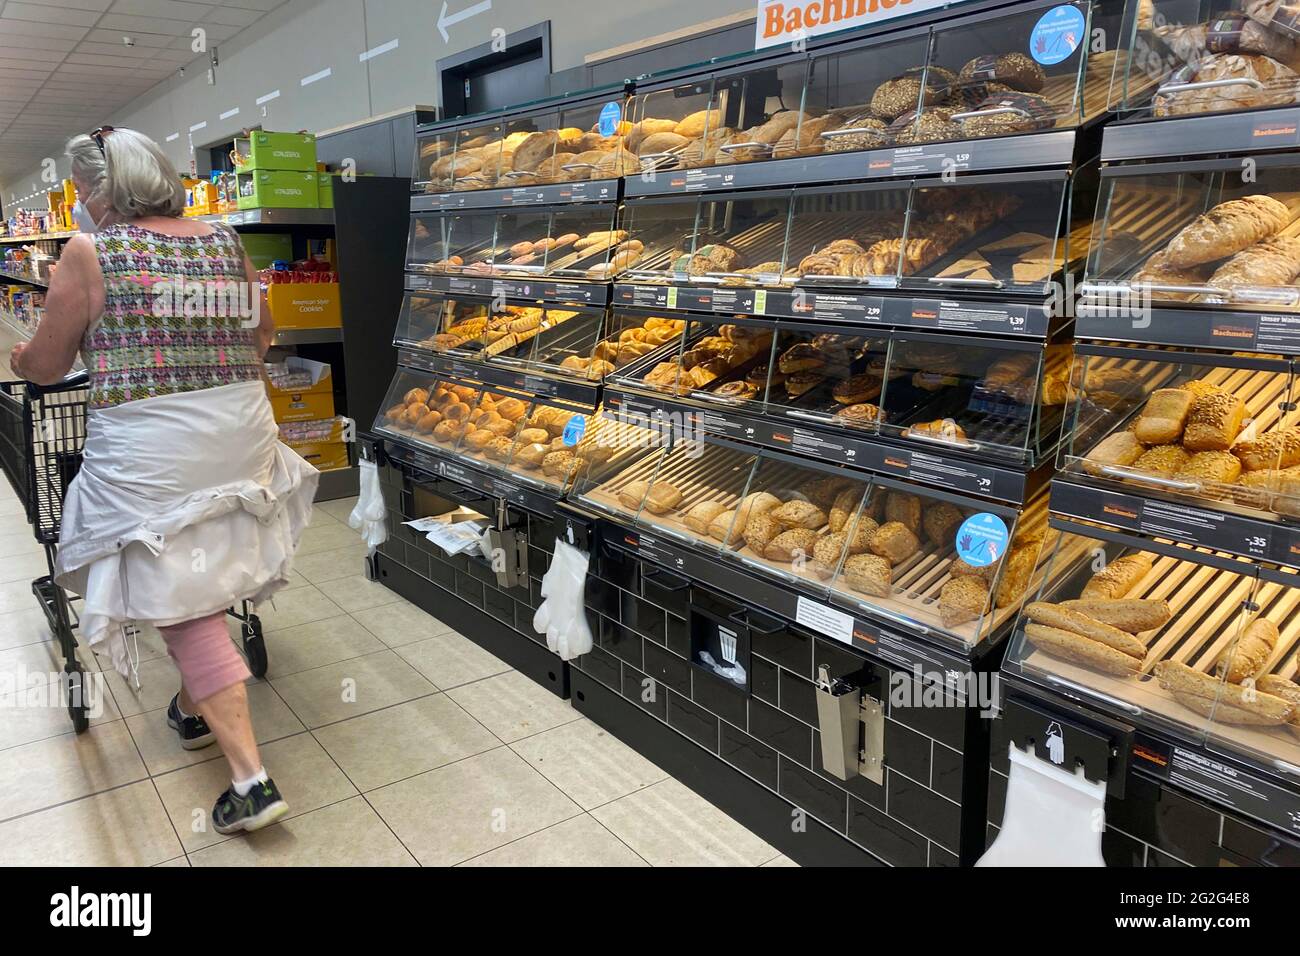 Munich, Deutschland. 10th June, 2021. Bread counter at the discounter Aldi  Sued, new baking concept, Credit: dpa/Alamy Live News Stock Photo - Alamy